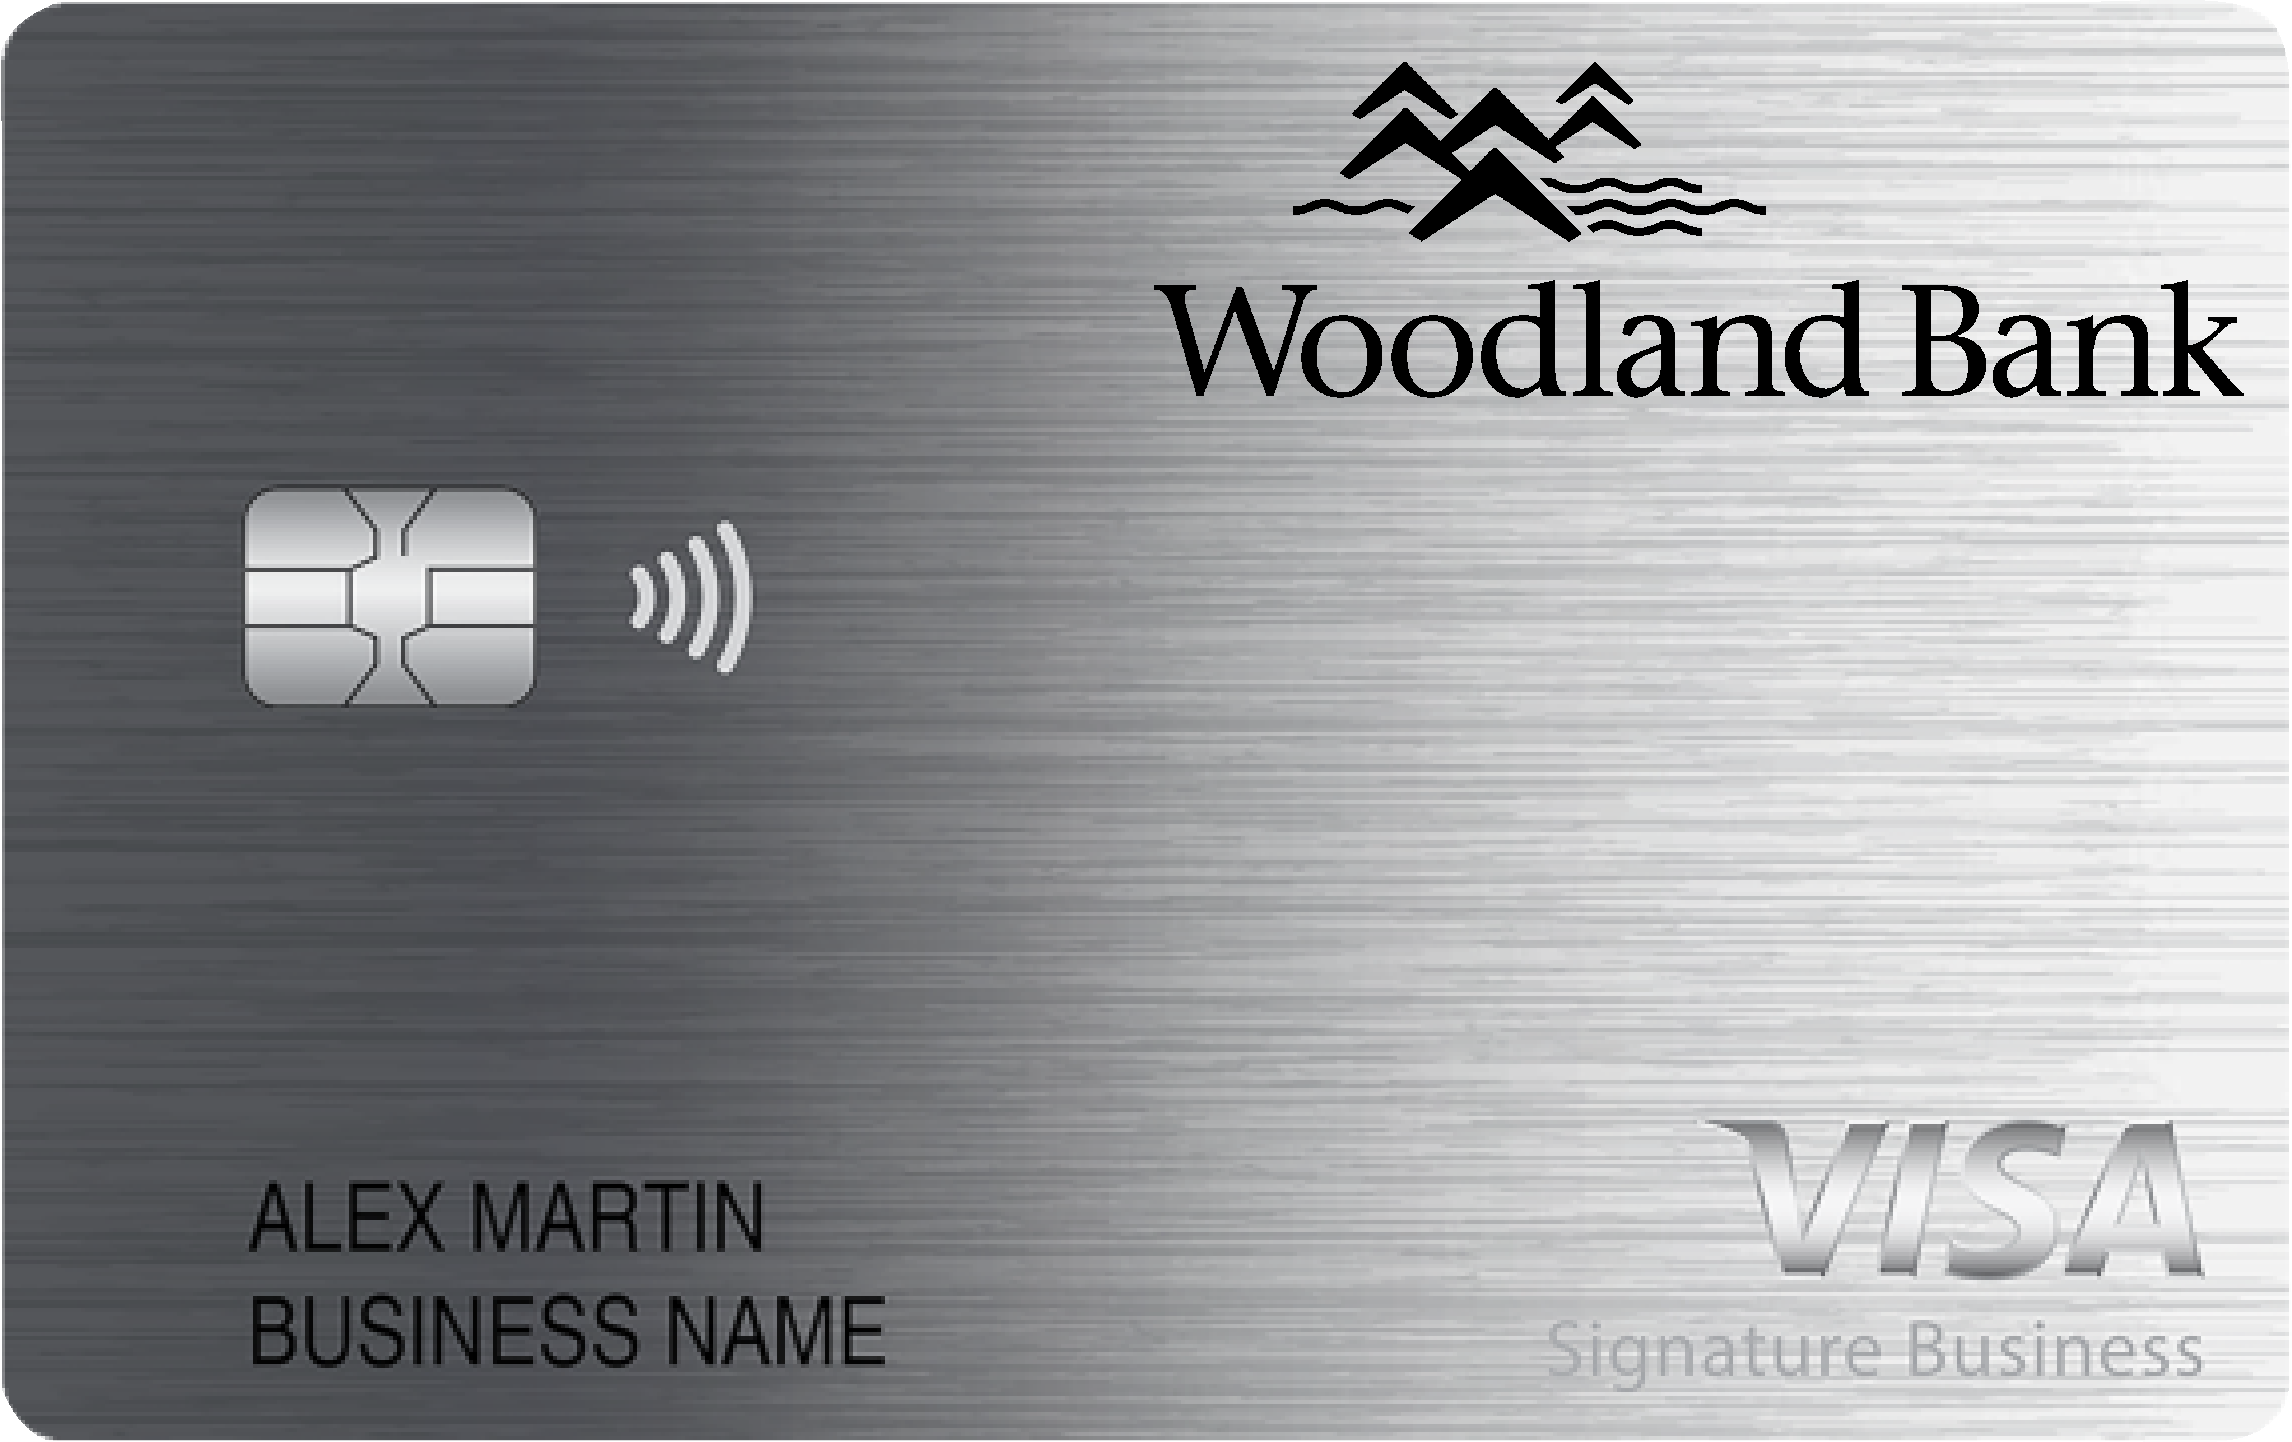 Woodland Bank Smart Business Rewards Card